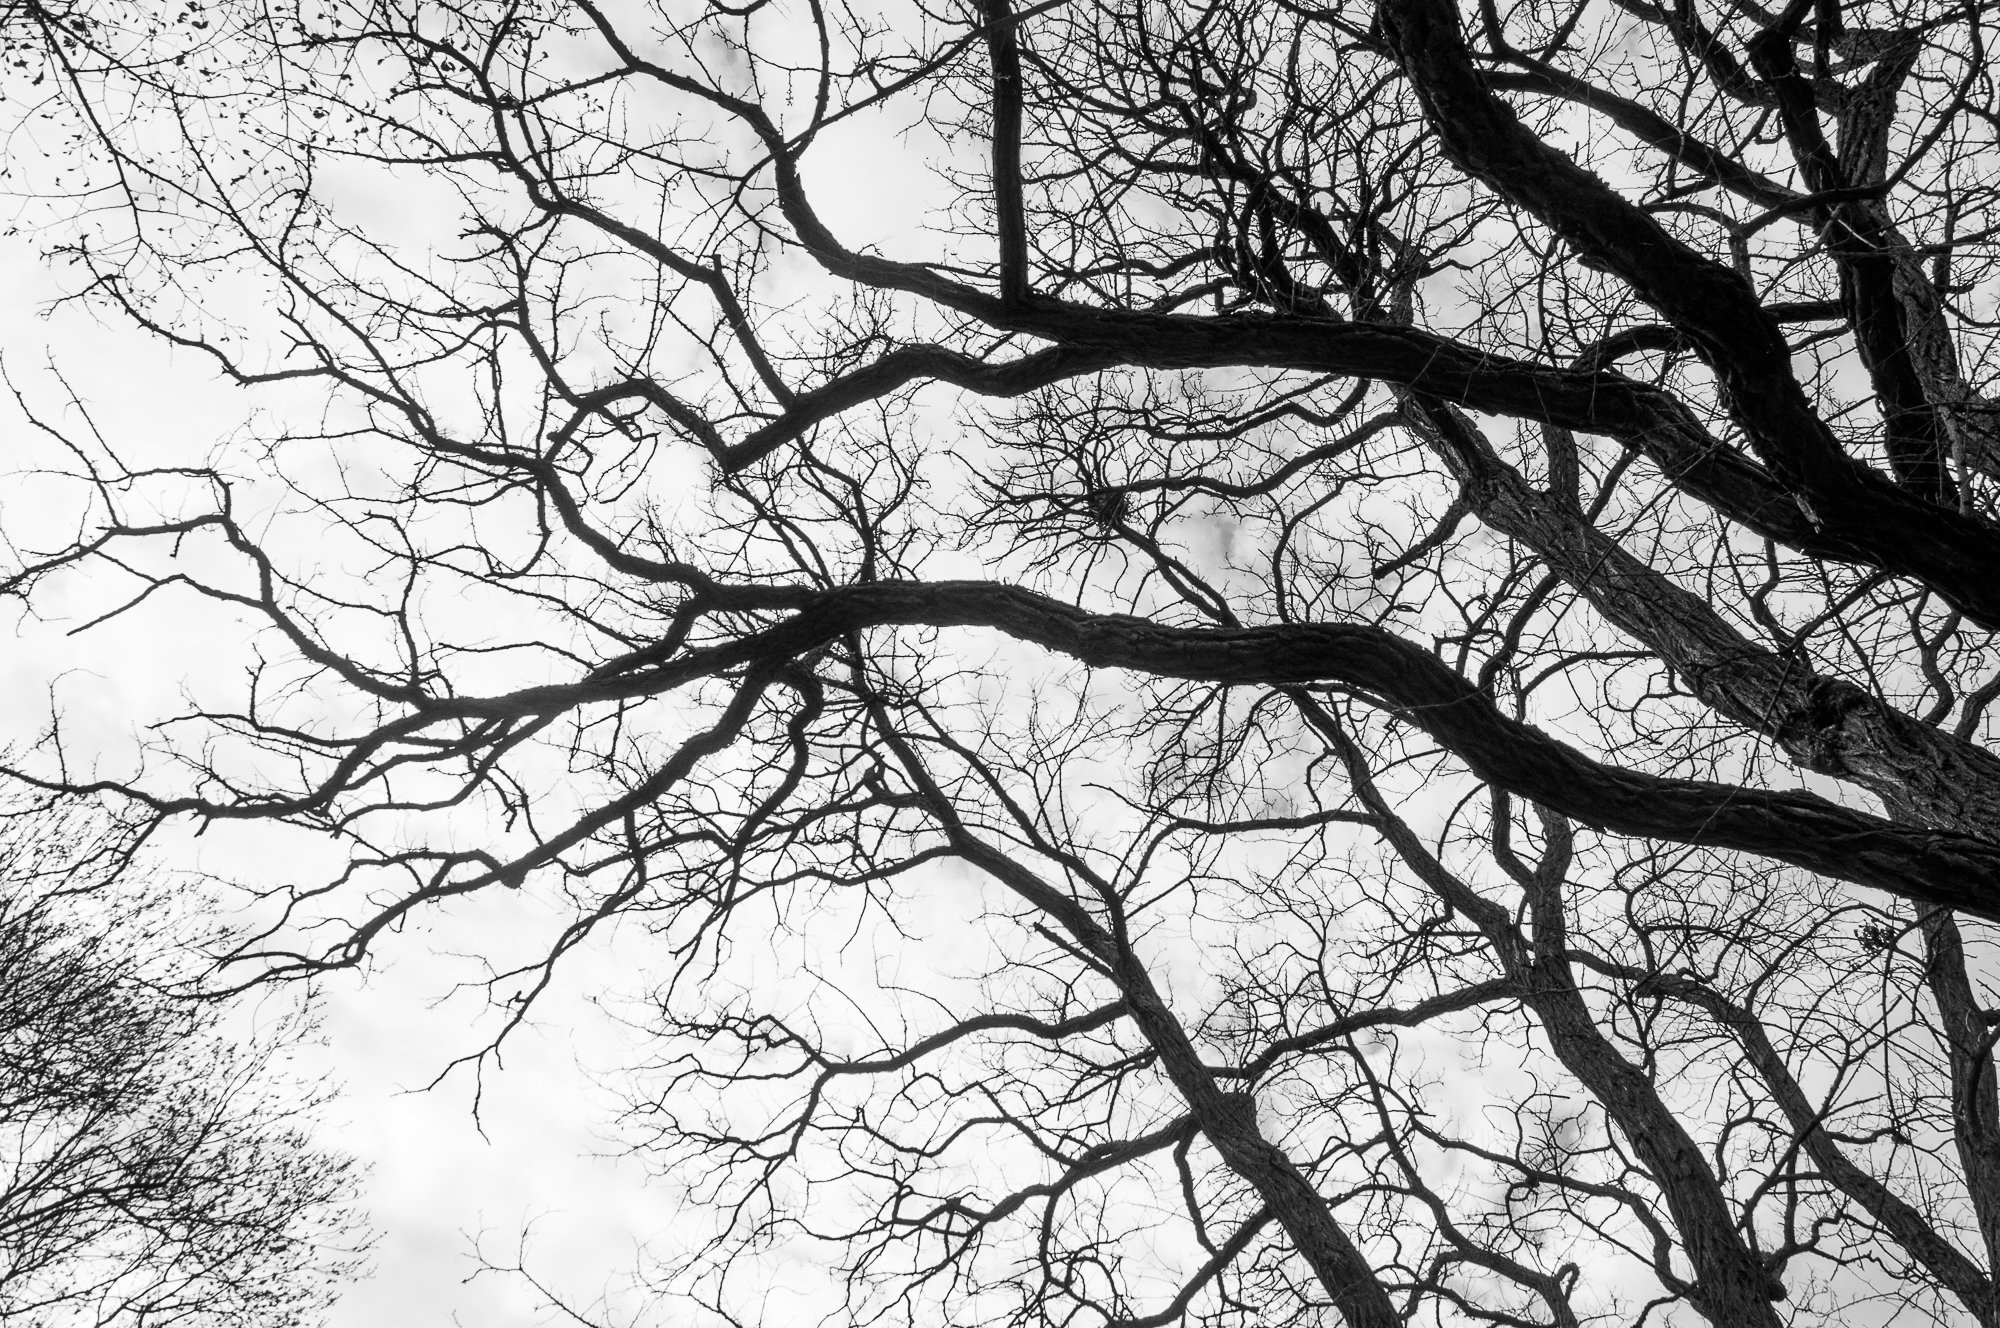 Adam Mazek Photography Warsaw (Warszawa) 2020. Post: "Free-thinker." Minimalism. Trees. Inspired by Hiroshige.